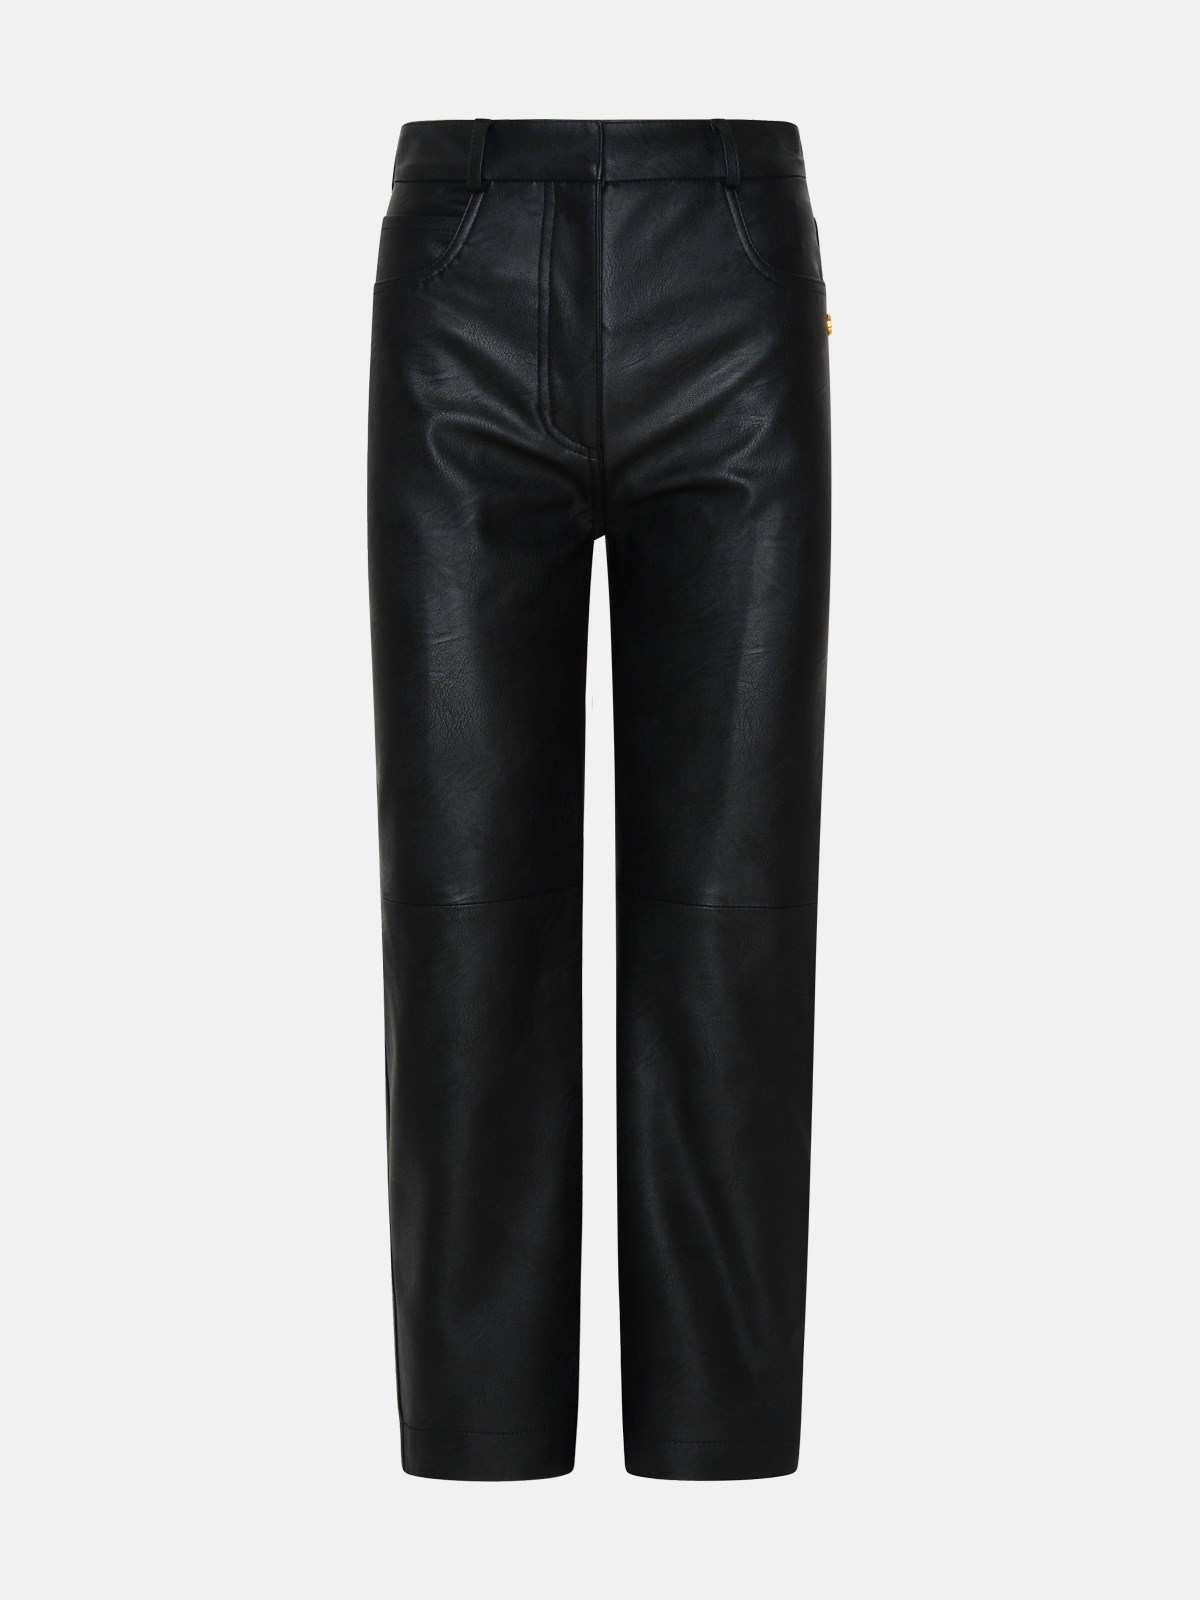 Stella Mccartney Black Polyester Blend Pants